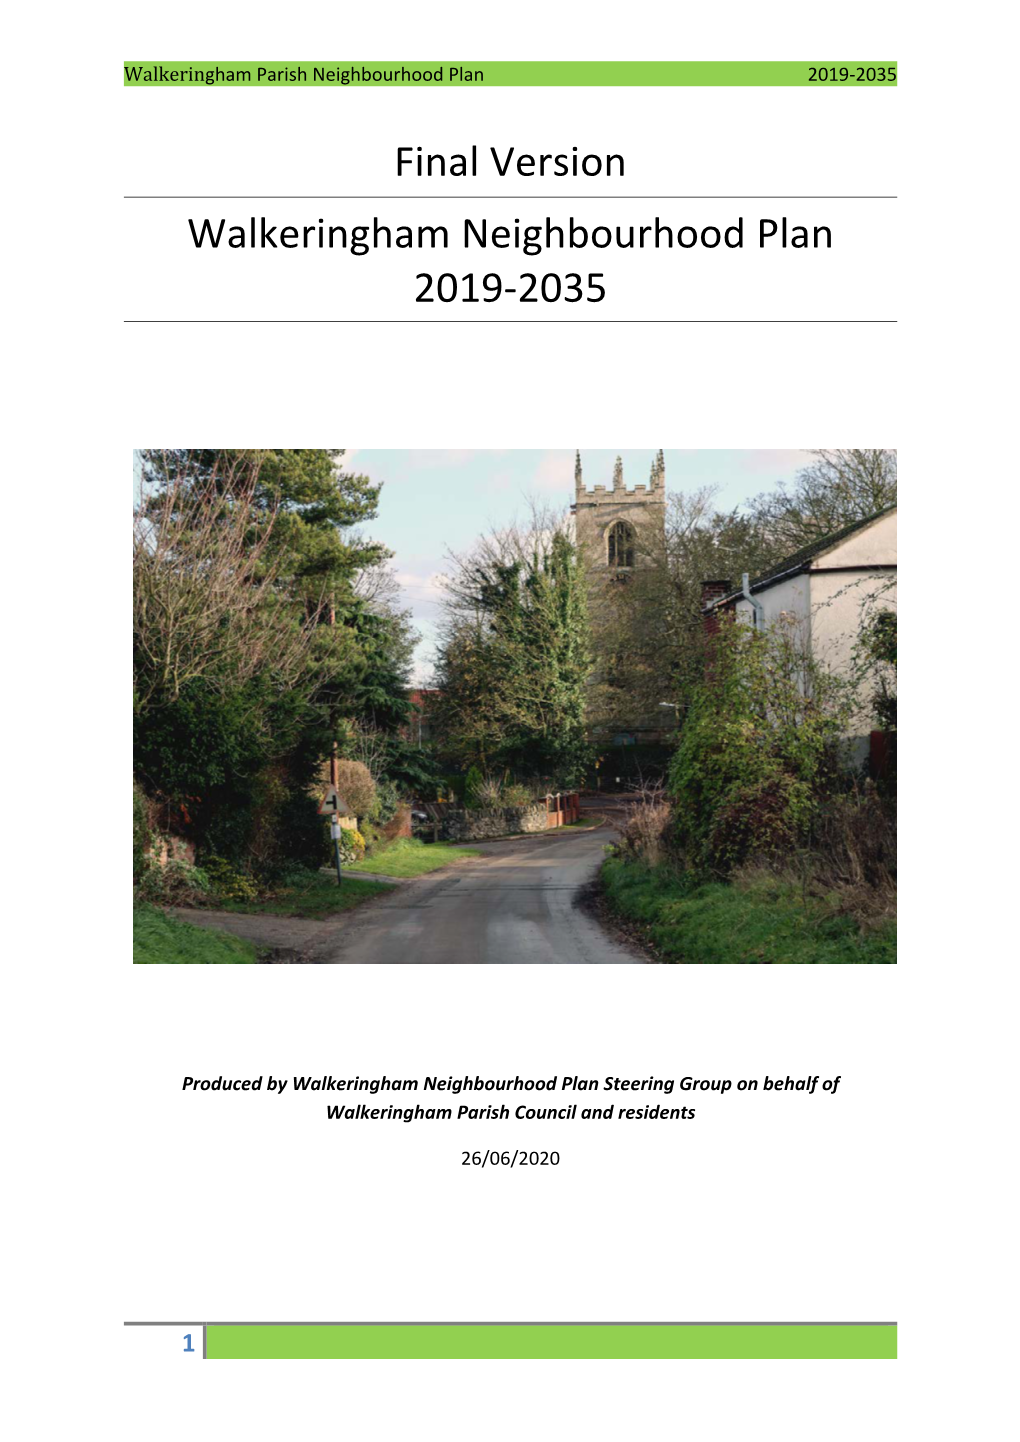 Final Version Walkeringham Neighbourhood Plan 2019-2035